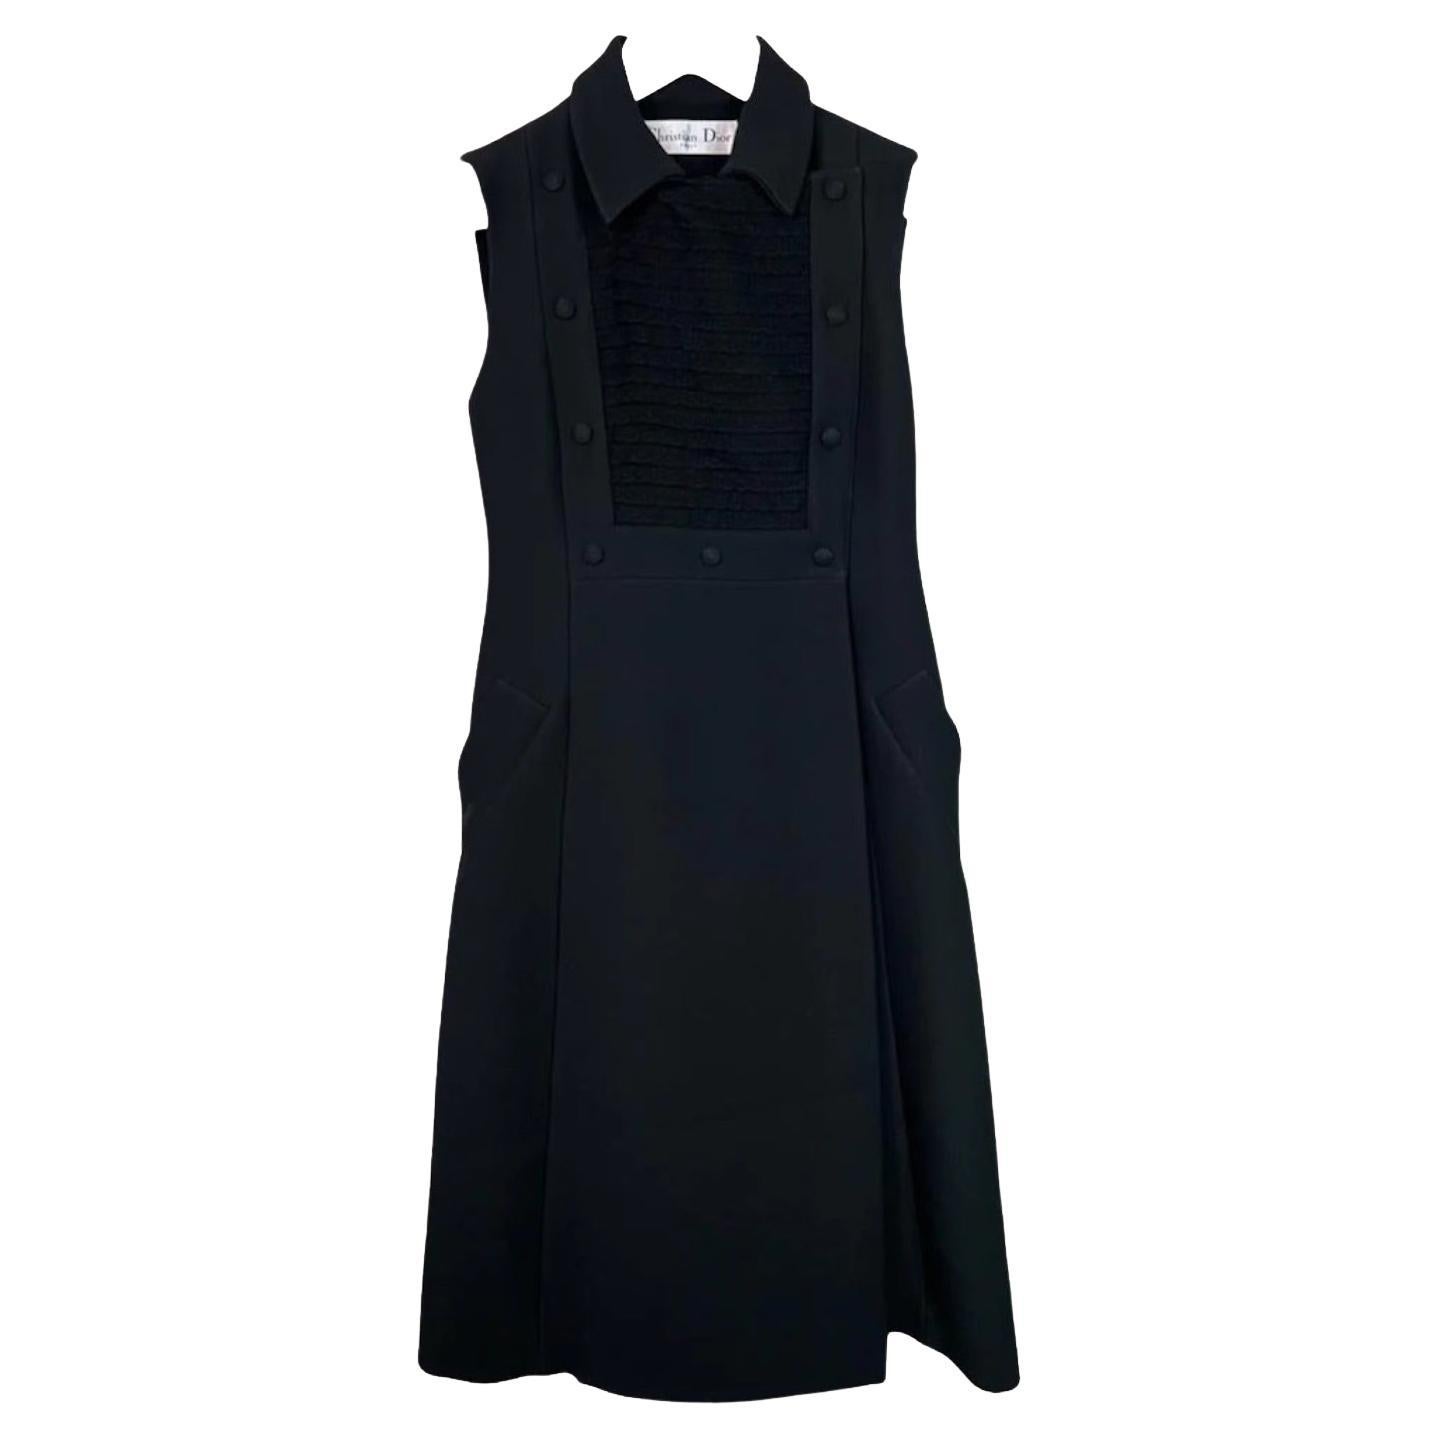 Christian Dior Black Dress For Sale